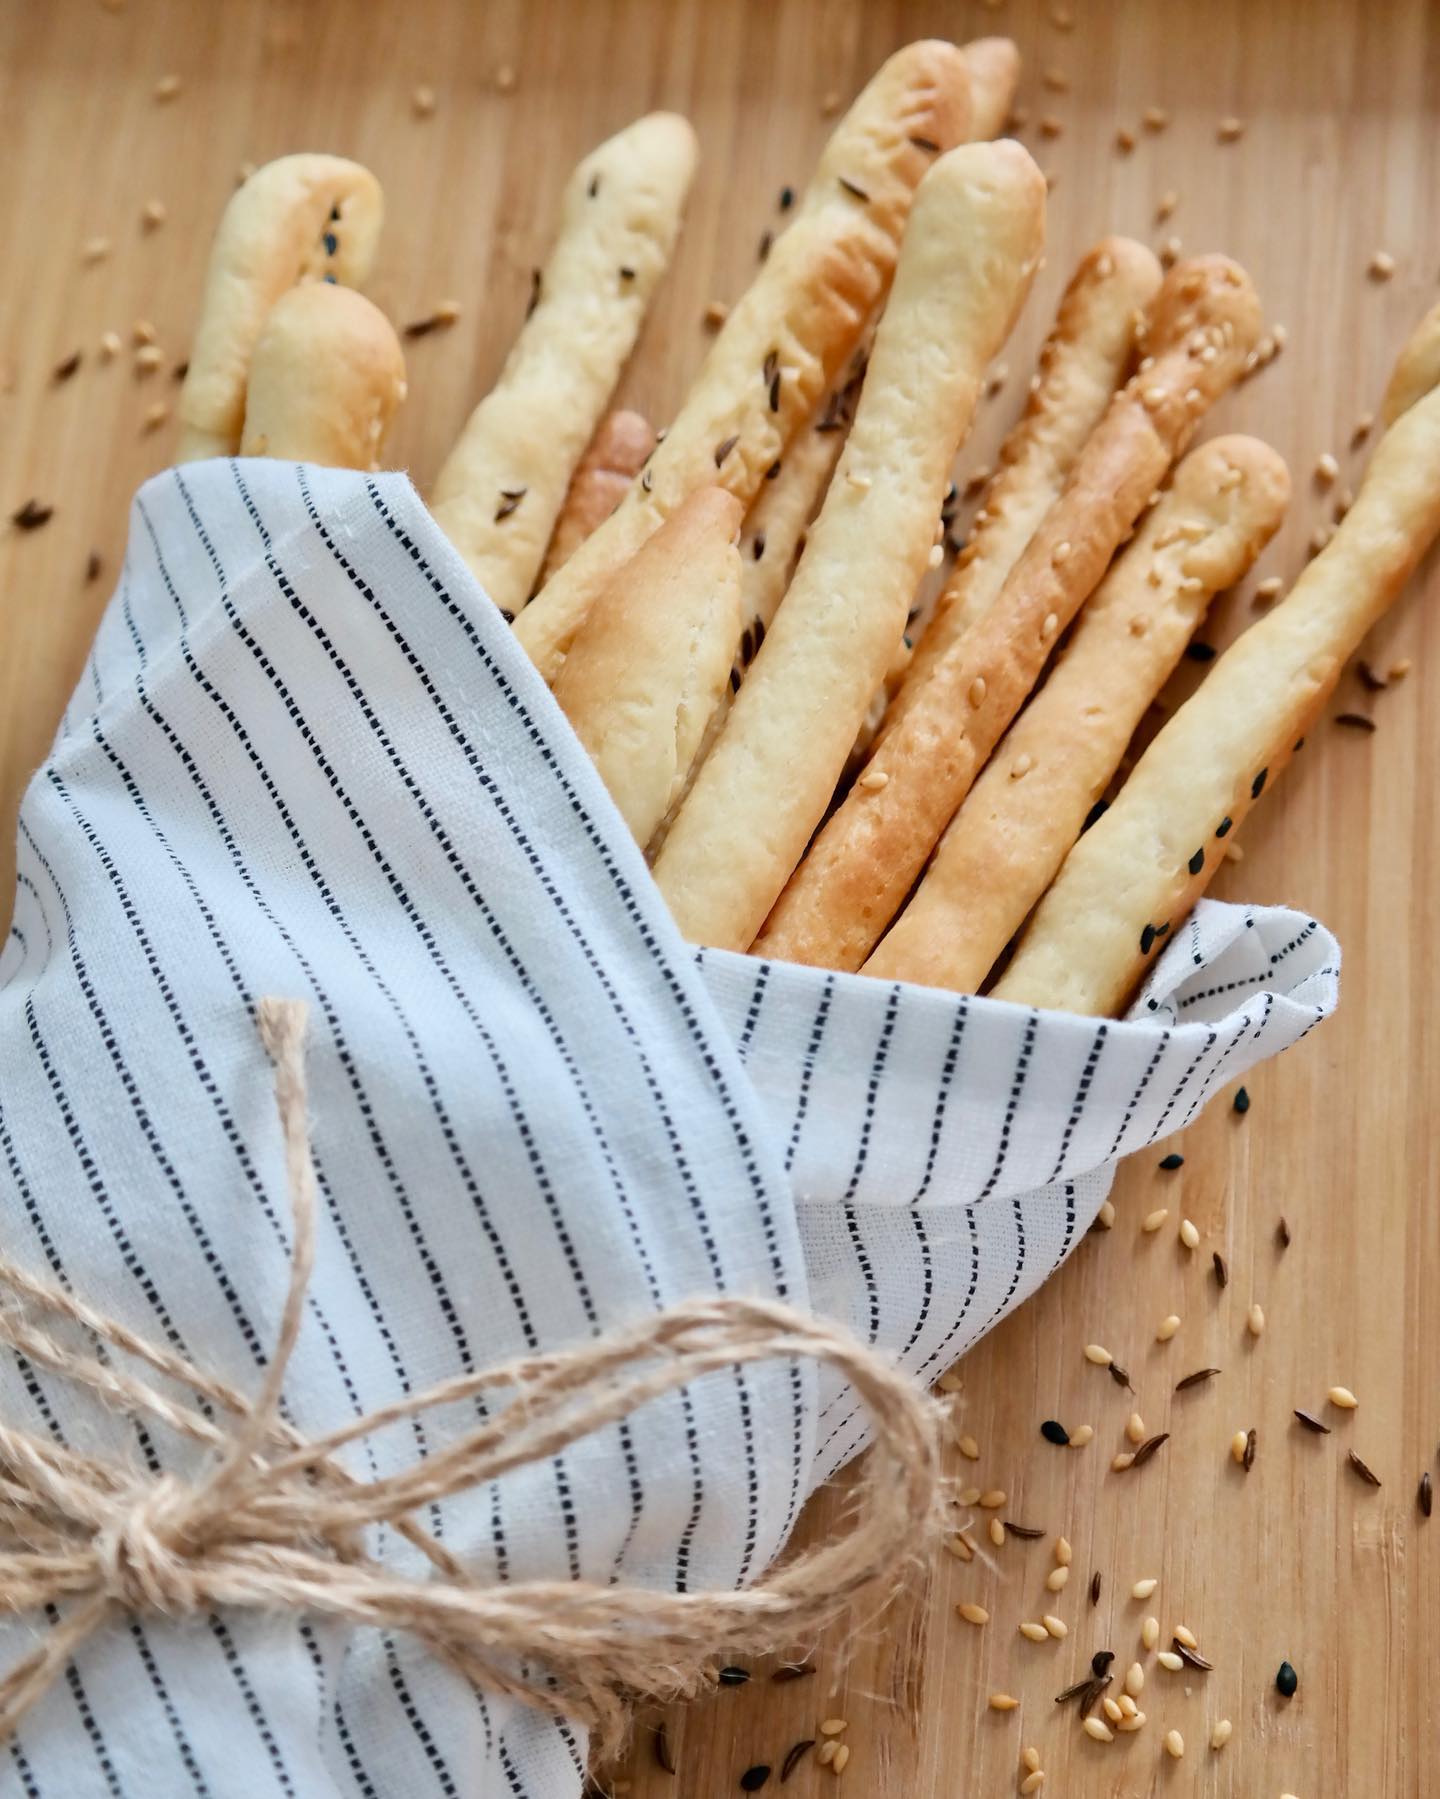 Homemade bread sticks (grissini) are the best 🥰
.
.
.
.
#baking #homebaking #bakingfromscratch #bakinglove #dough #homebaked #bread #breadsticks #food #bakerenthusiast #instagood #instafood #ilovebaking #foodblogger